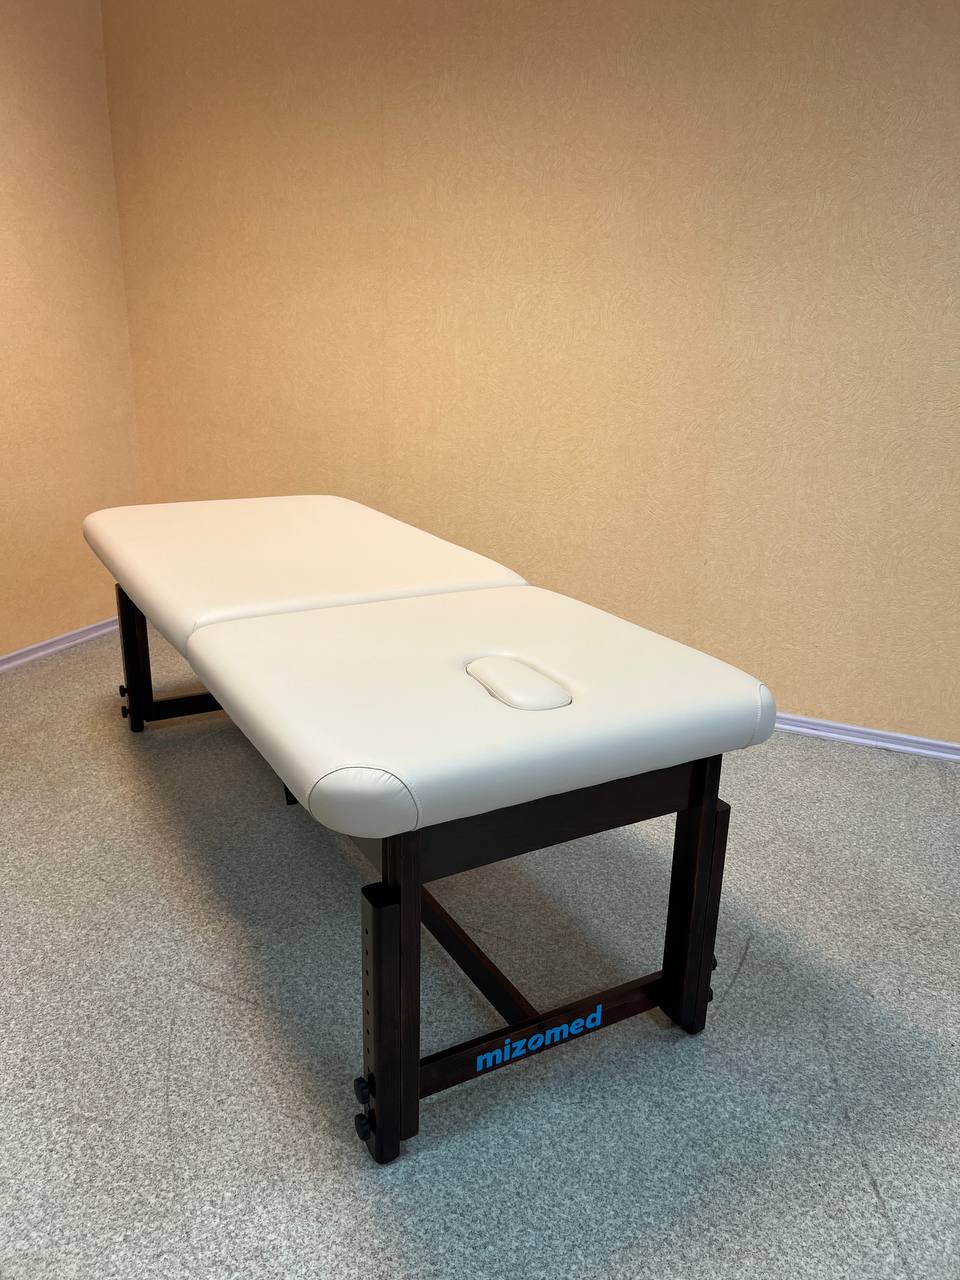 Массажный стационарный стол Mizomed Essence-Tilt SET3S30+H - 22 